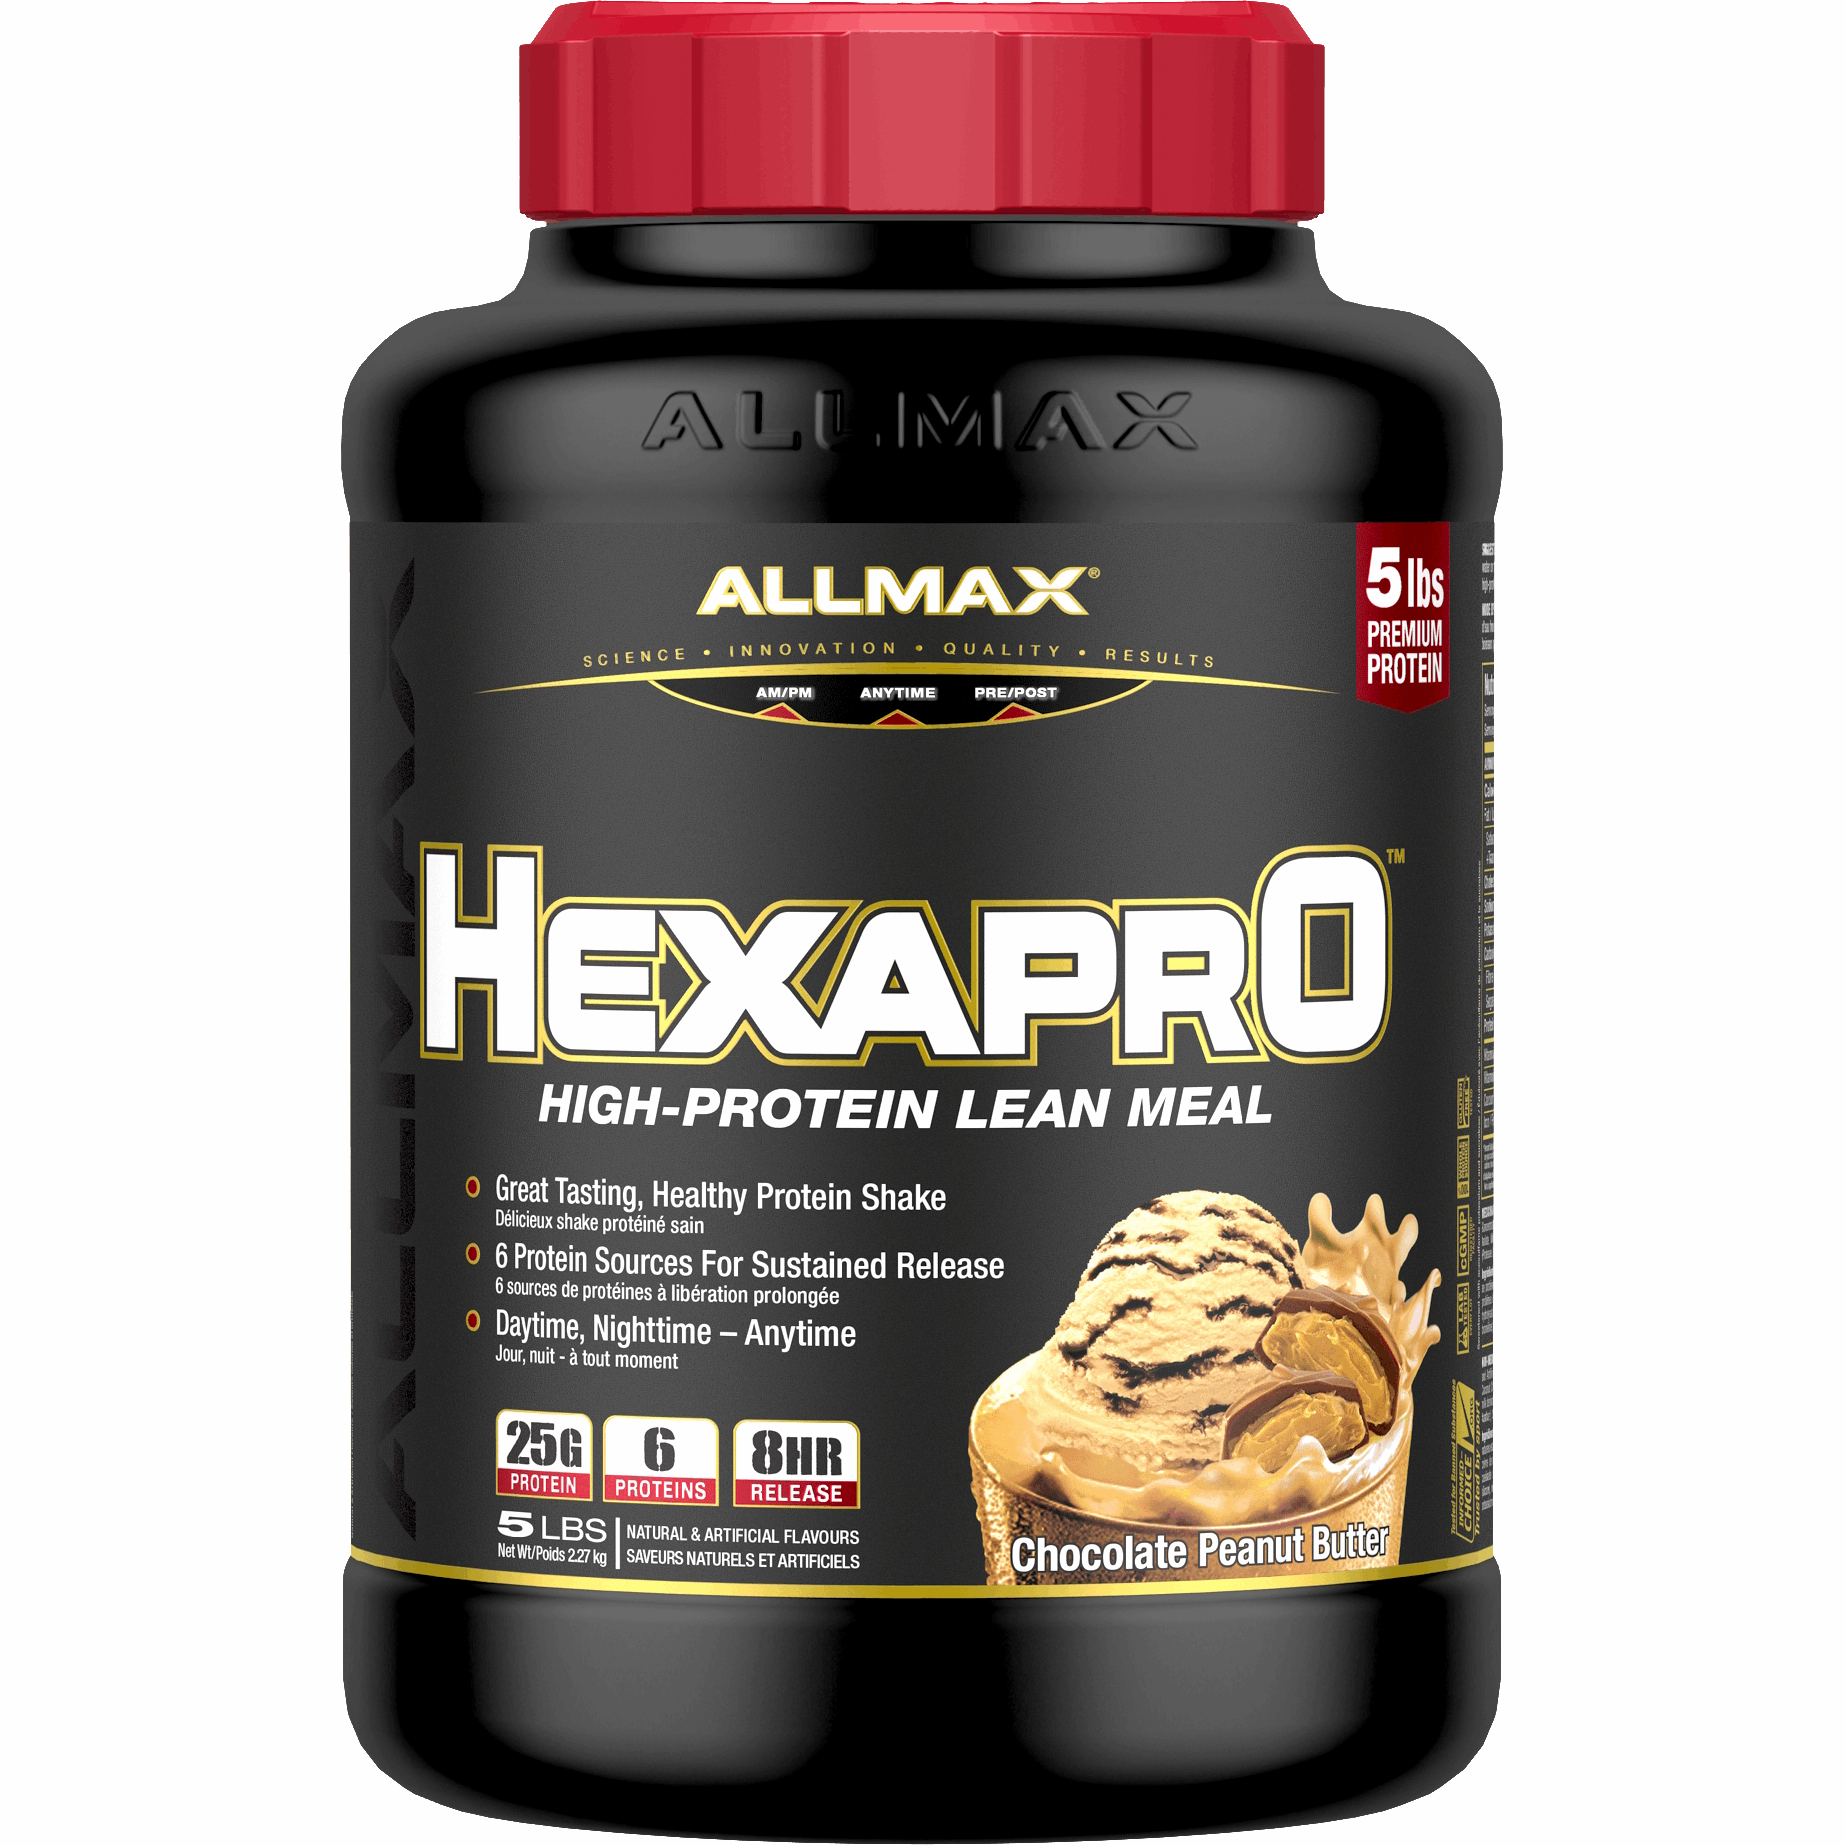 ALLMAX Hexapro (5 LBS) allmax-hexapro-5-5lbs Whey Protein Blend Chocolate Peanut Butter Allmax Nutrition